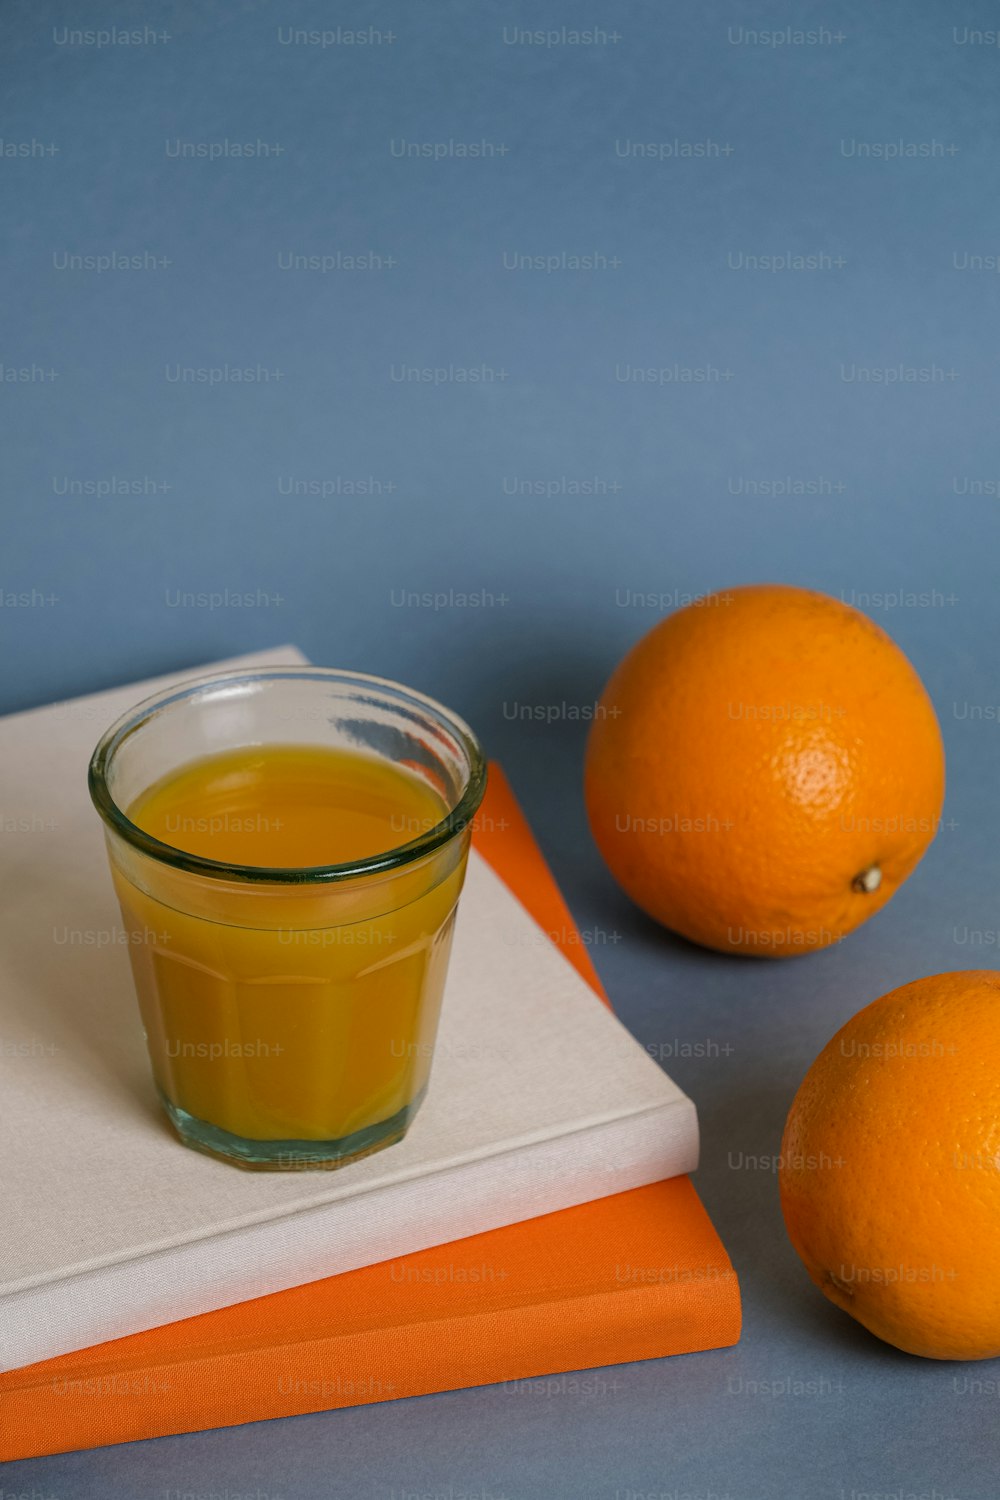 a glass of orange juice next to two oranges